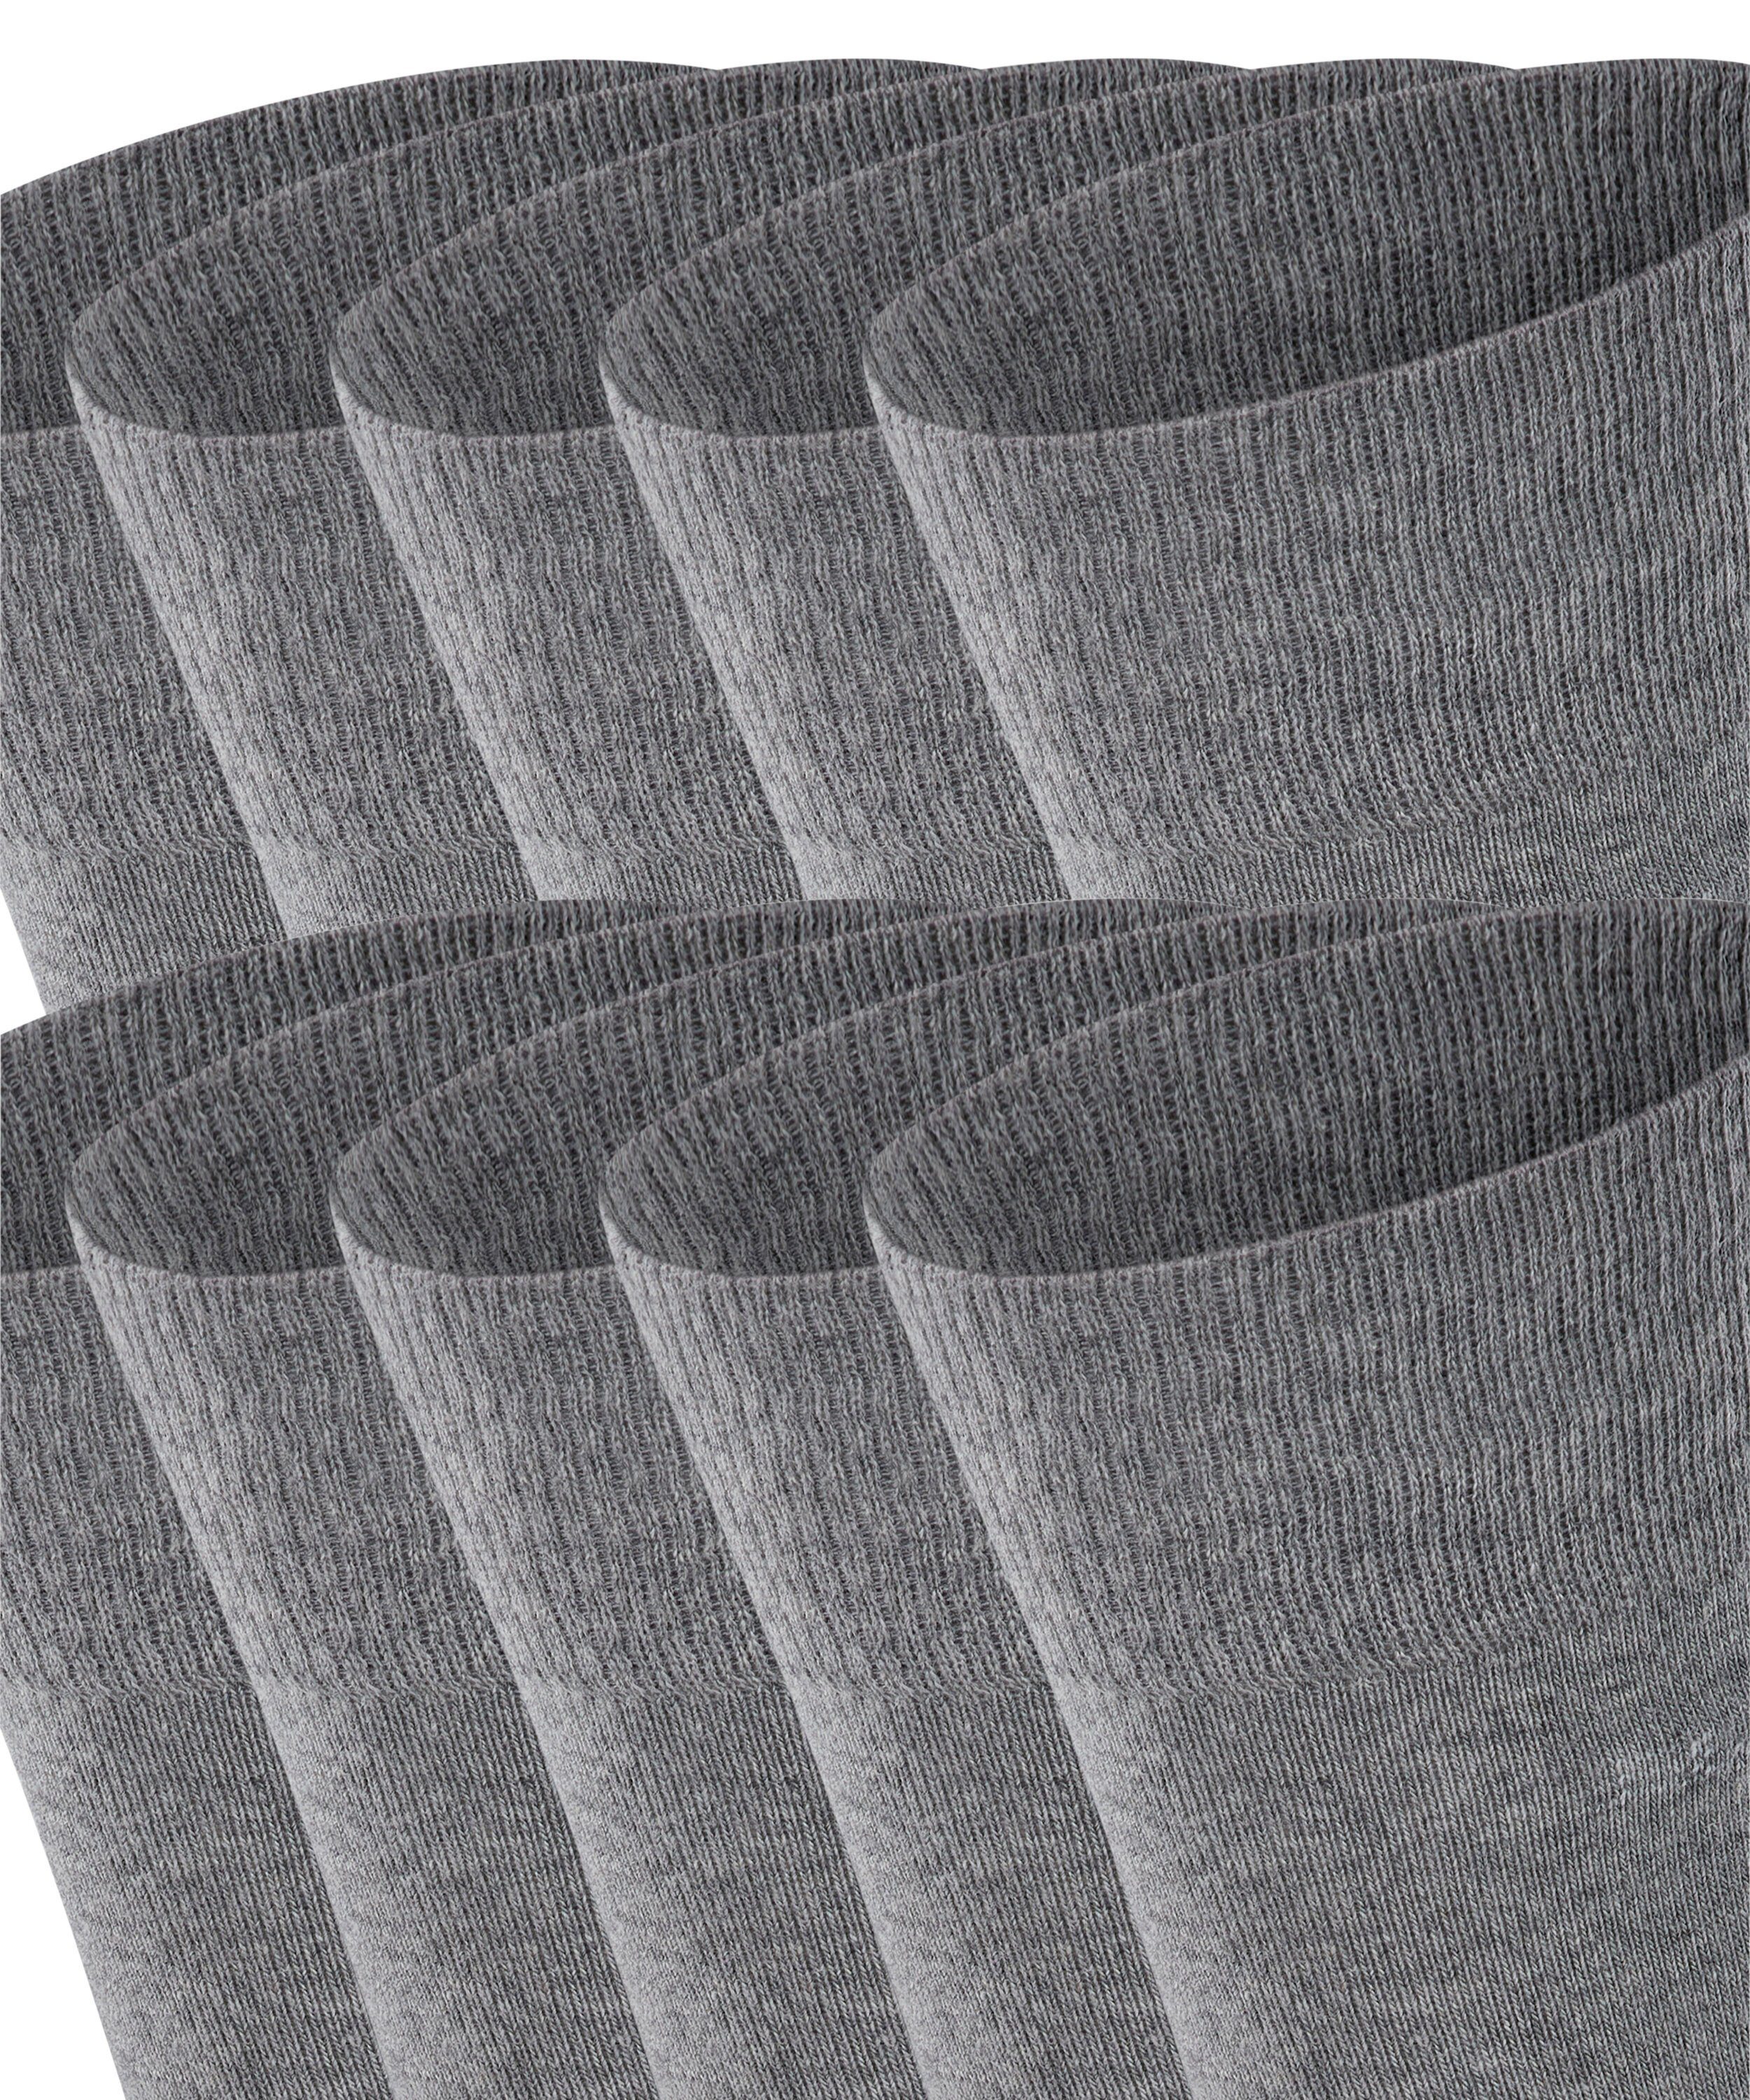 Esprit Socken Uni 10-Pack (10-Paar) (3390) light greymel